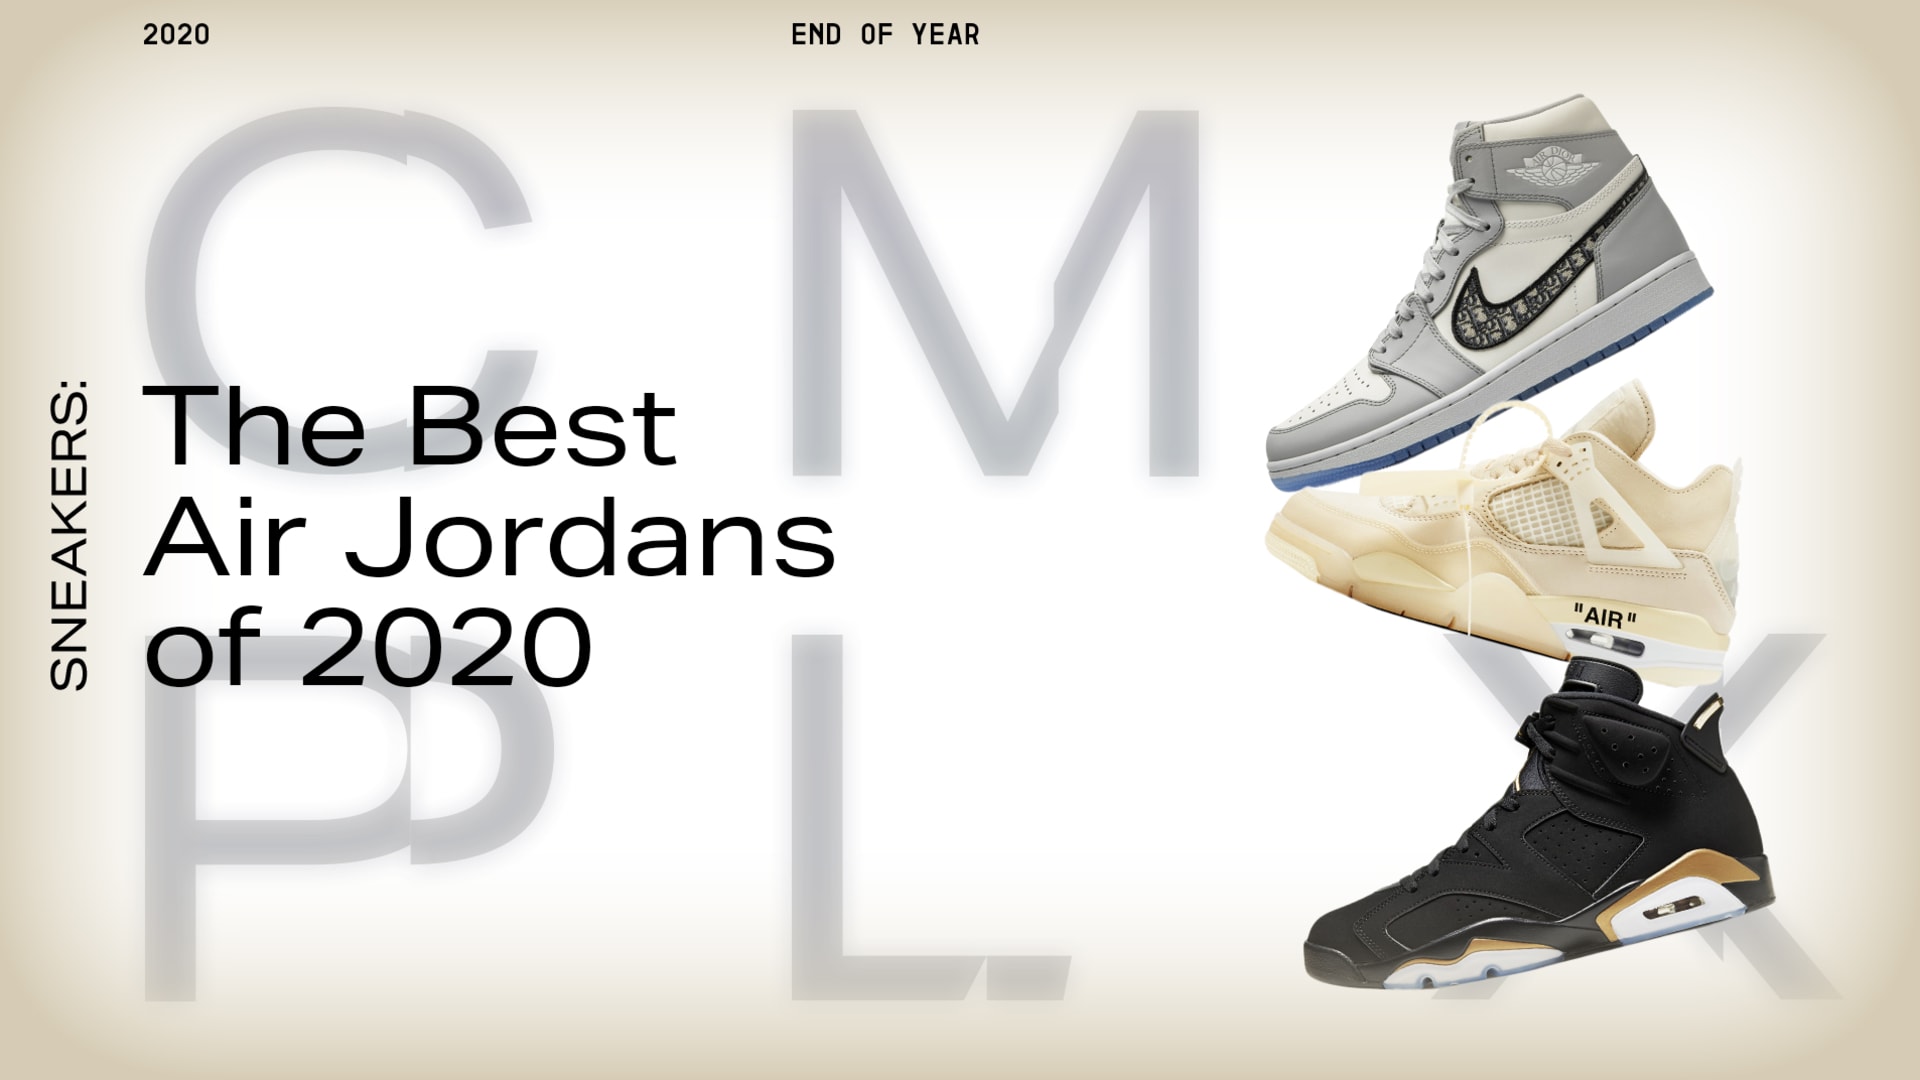 skipper kande let Best Air Jordans of 2020: Top Jordan Releases of the Year | Complex